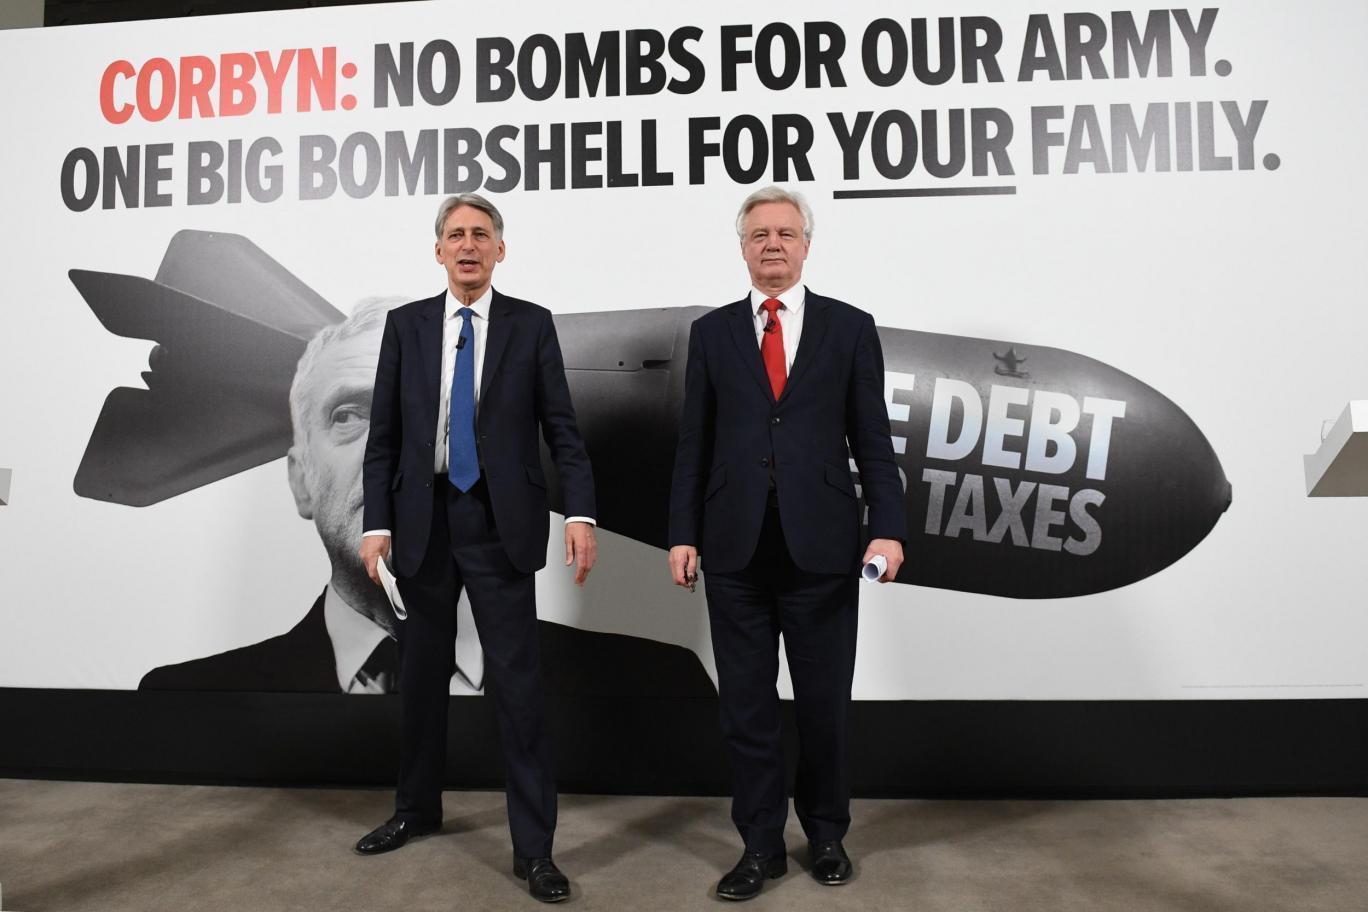 Philip Hammond and David Davis launch the Corbyn bombshell poster